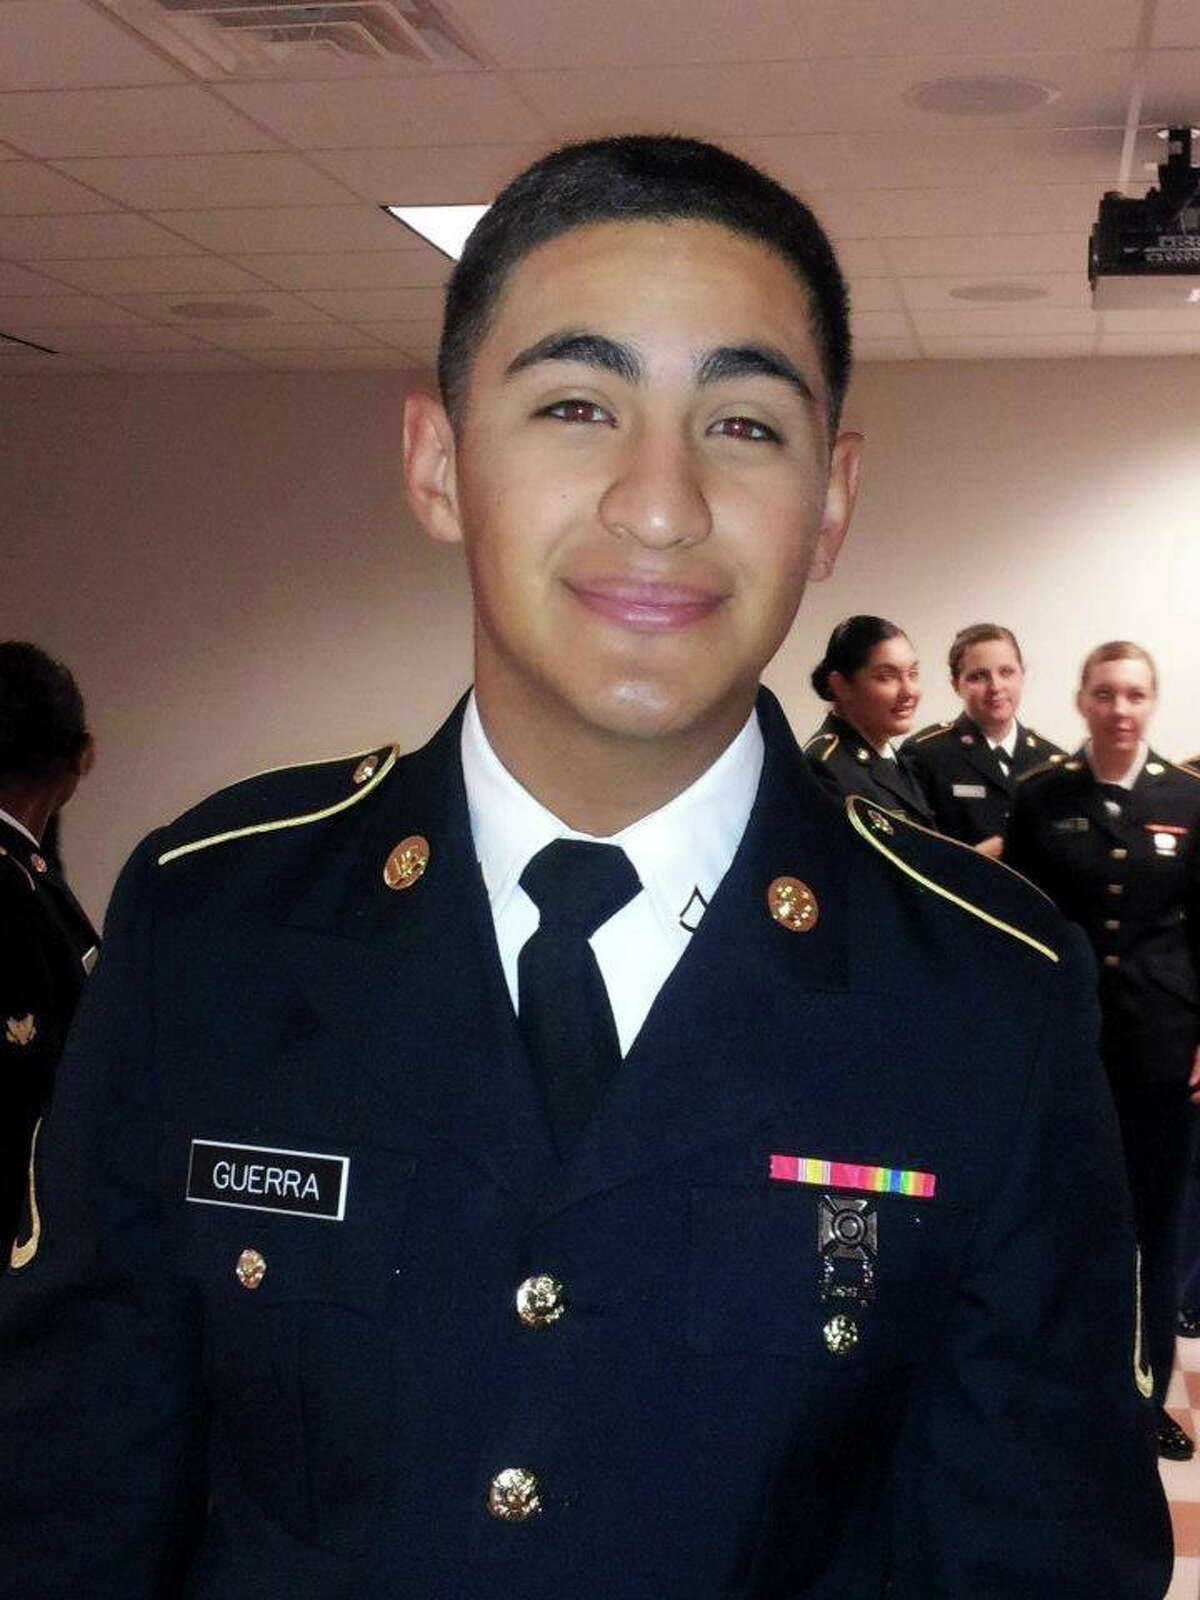 Jose Alberto Guerra, 19, was fatally shot by a Bexar County sergeant.